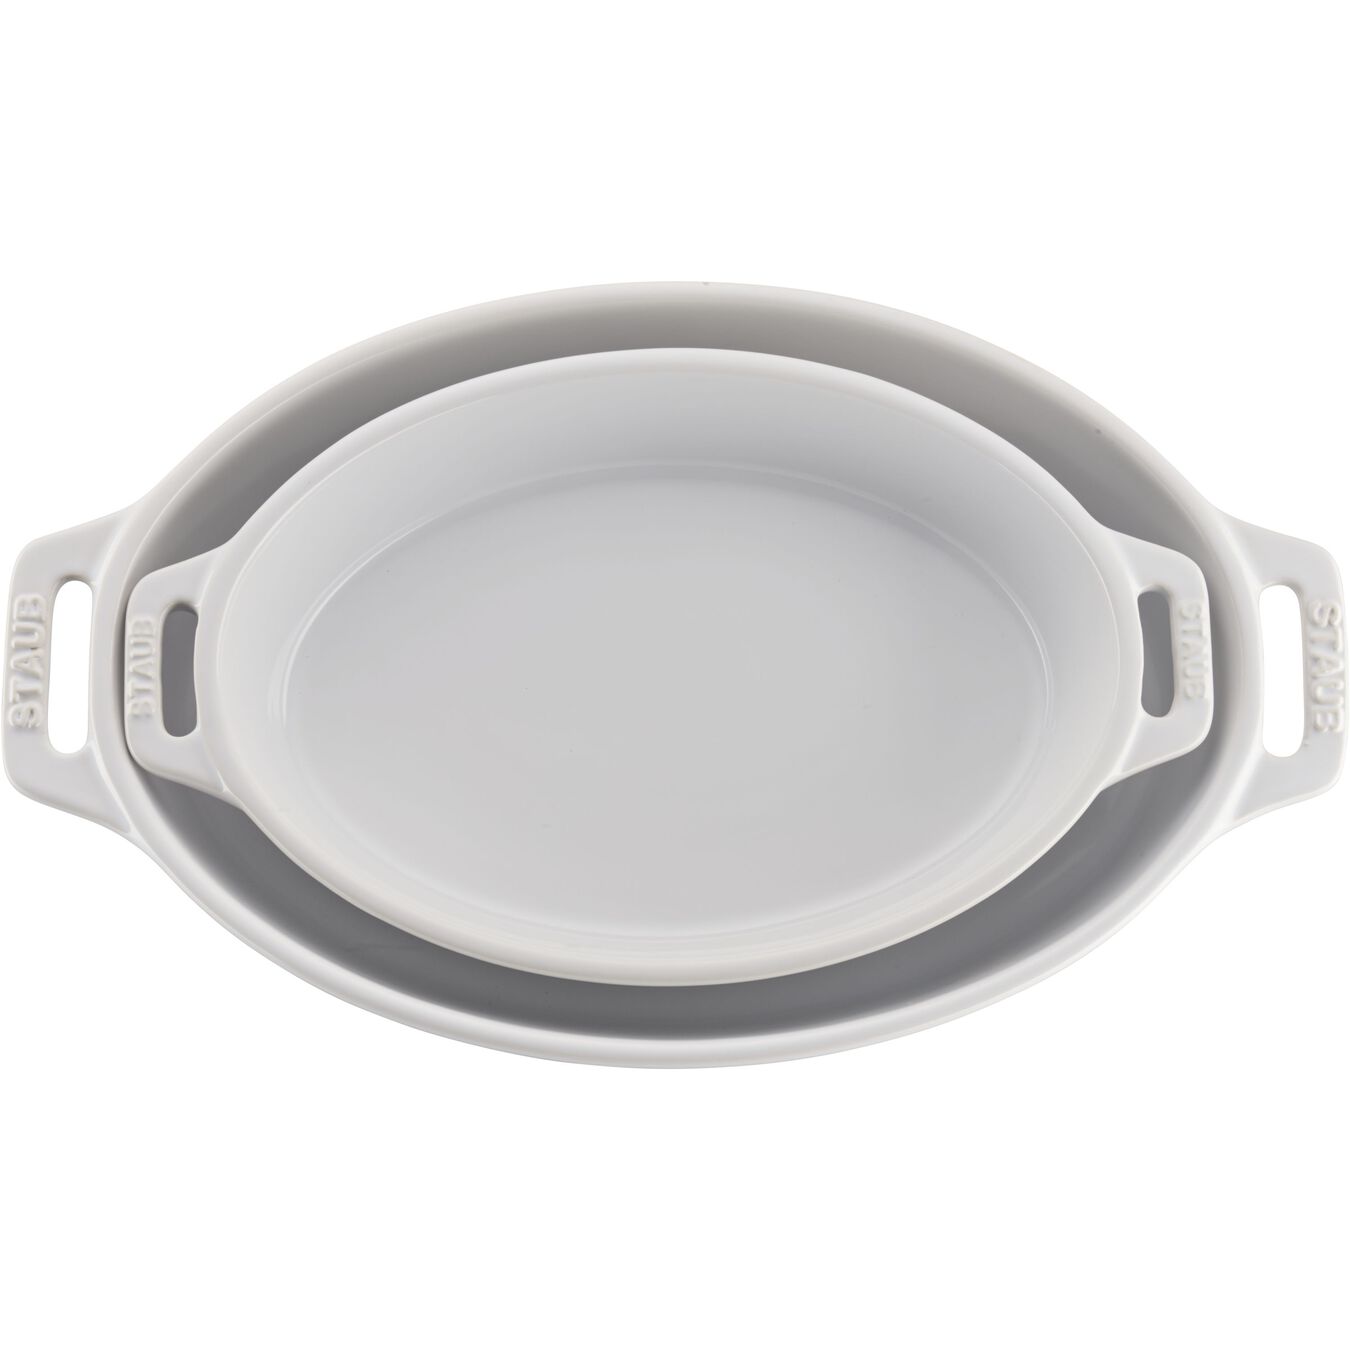 Staub Ceramic 2-pc Oval Baking Dish Set - White